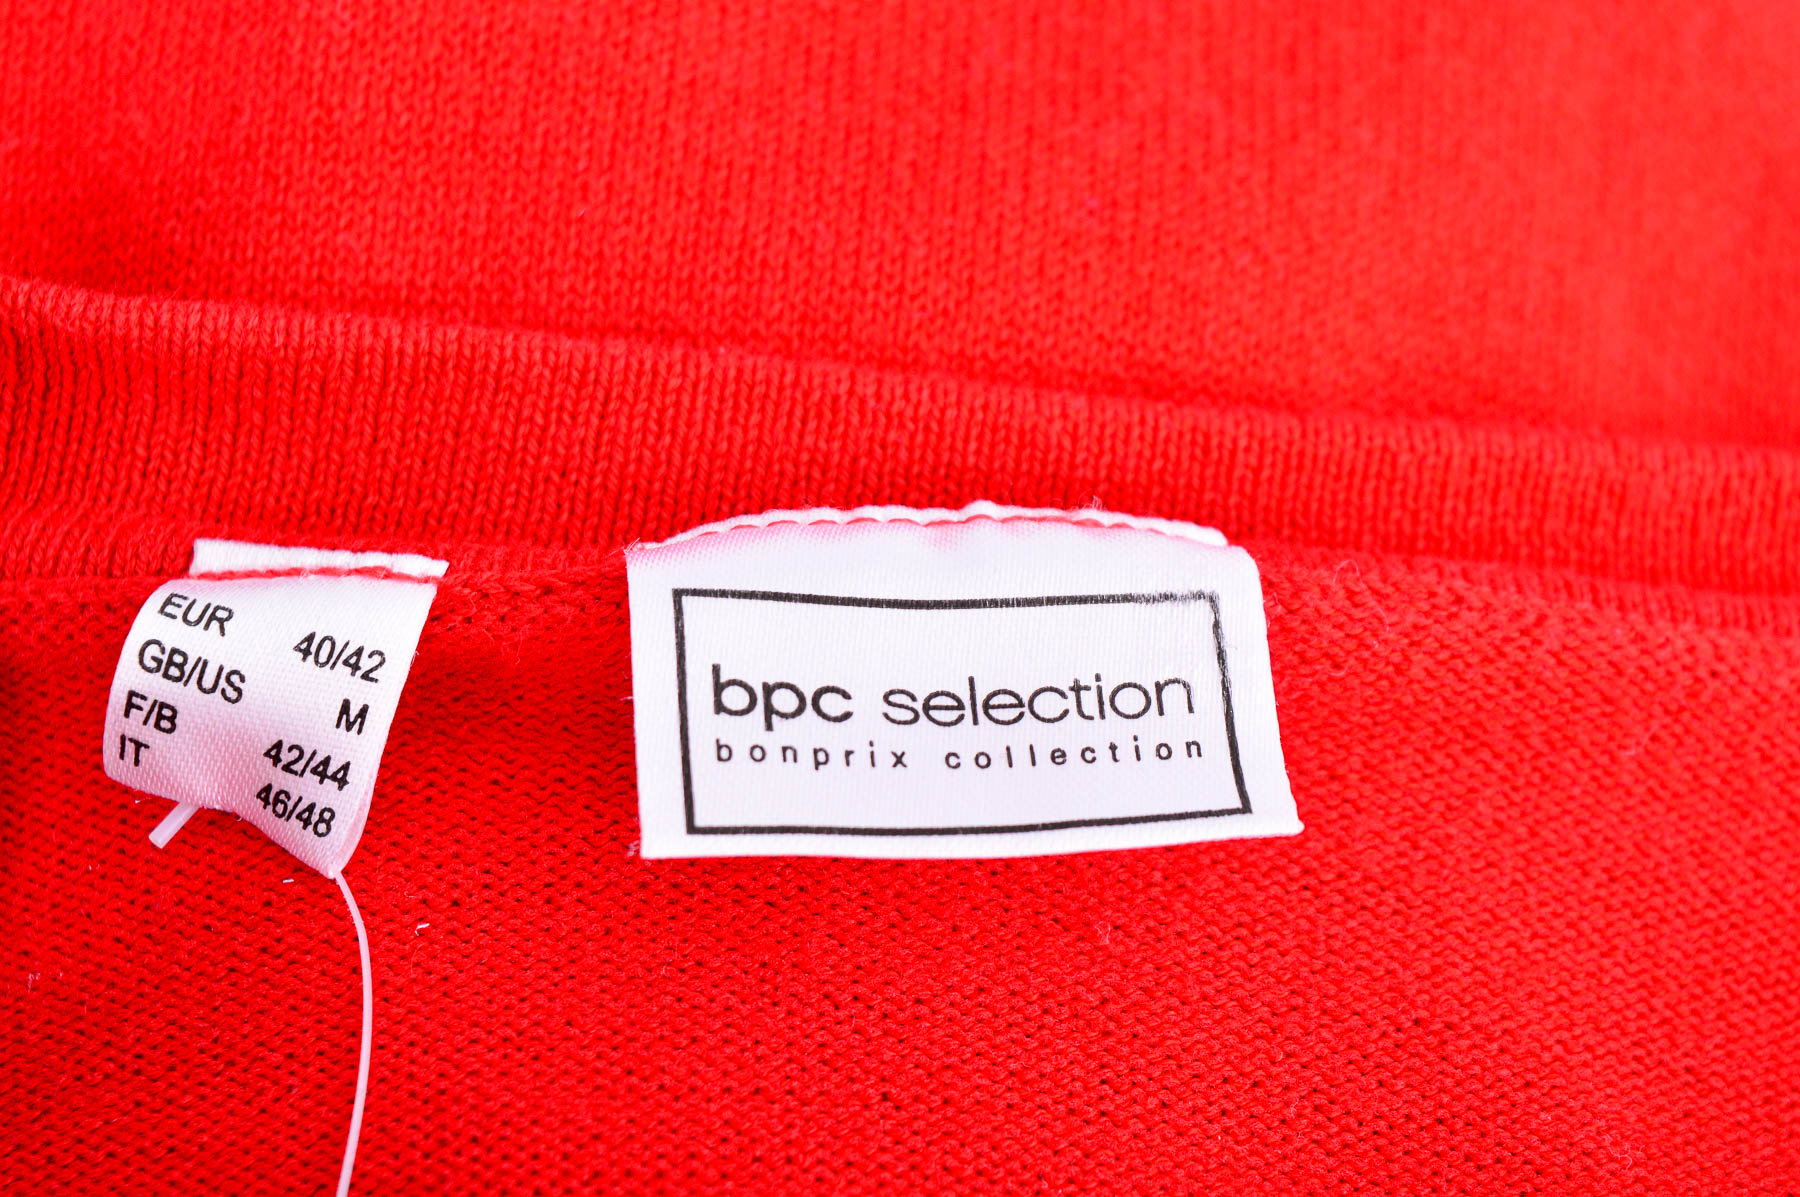 Women's cardigan - Bpc Bonprix Collection - 2